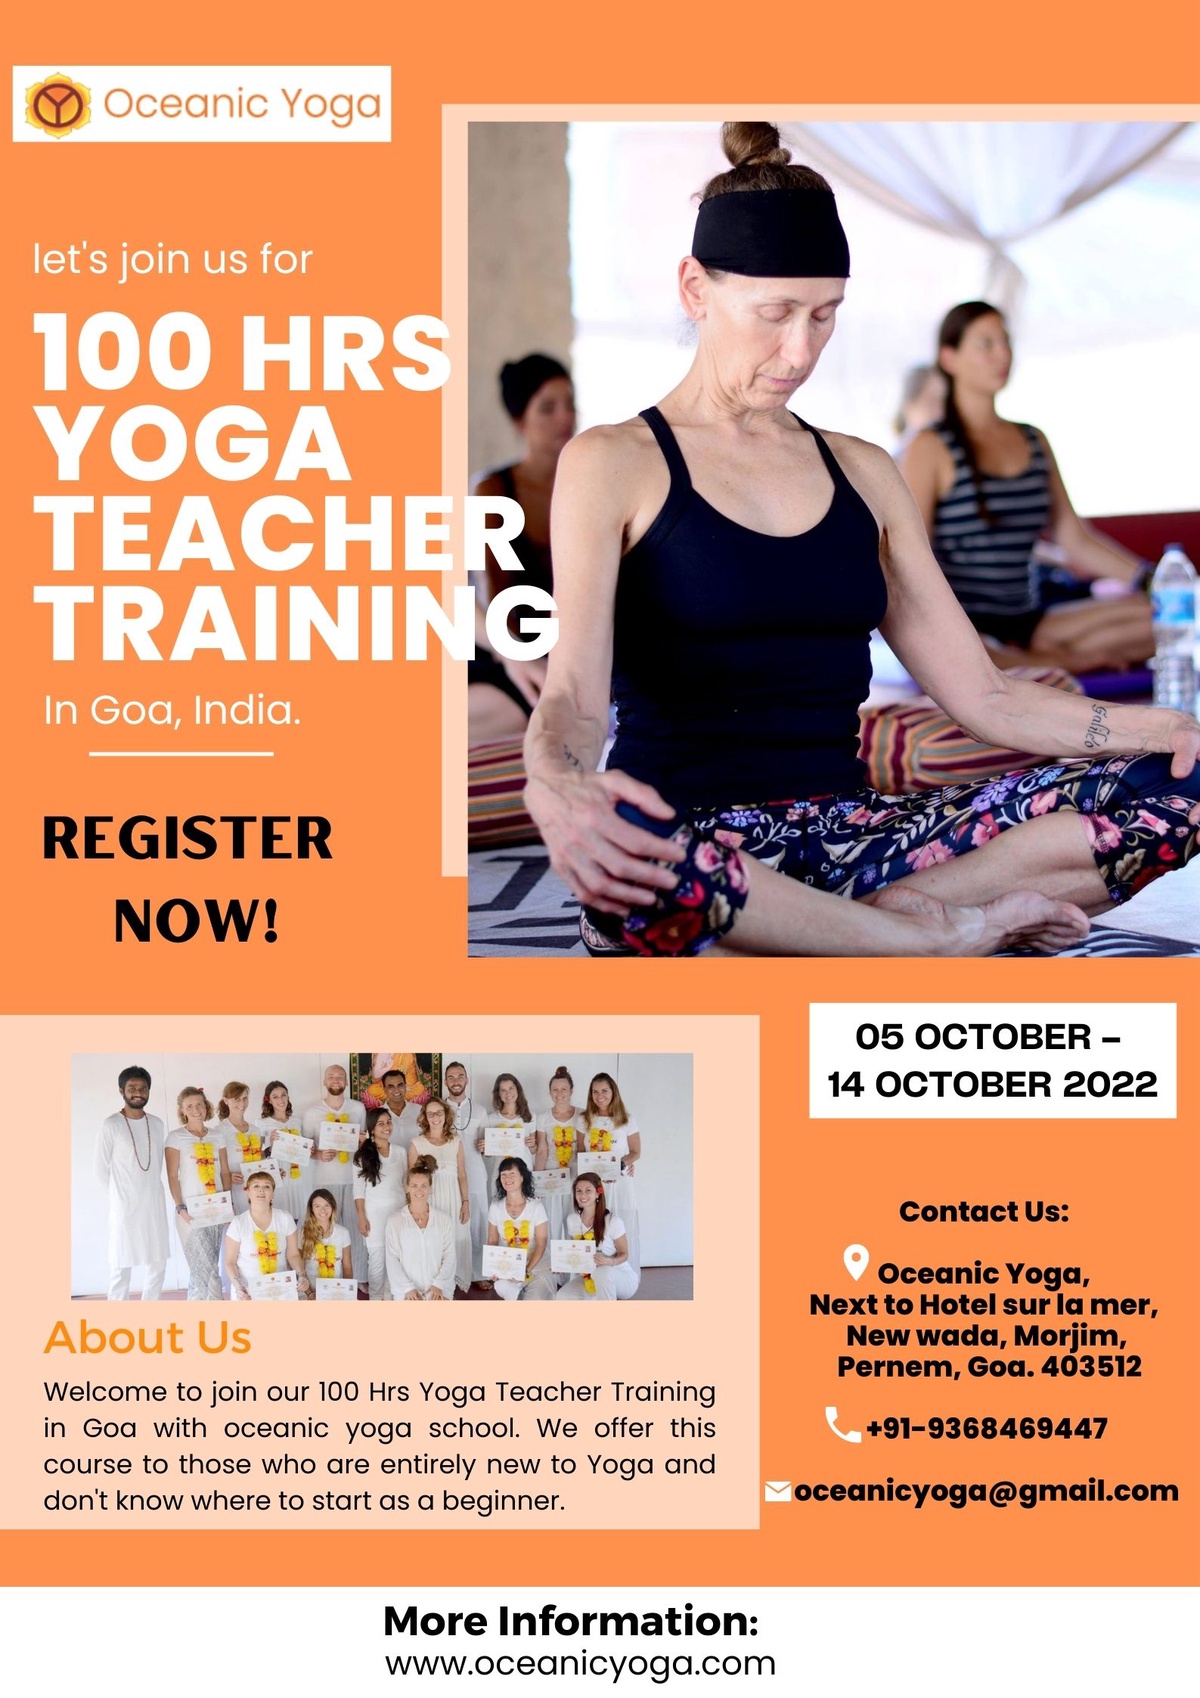 100-Hour Yoga Teacher Training in Goa is an excellent option